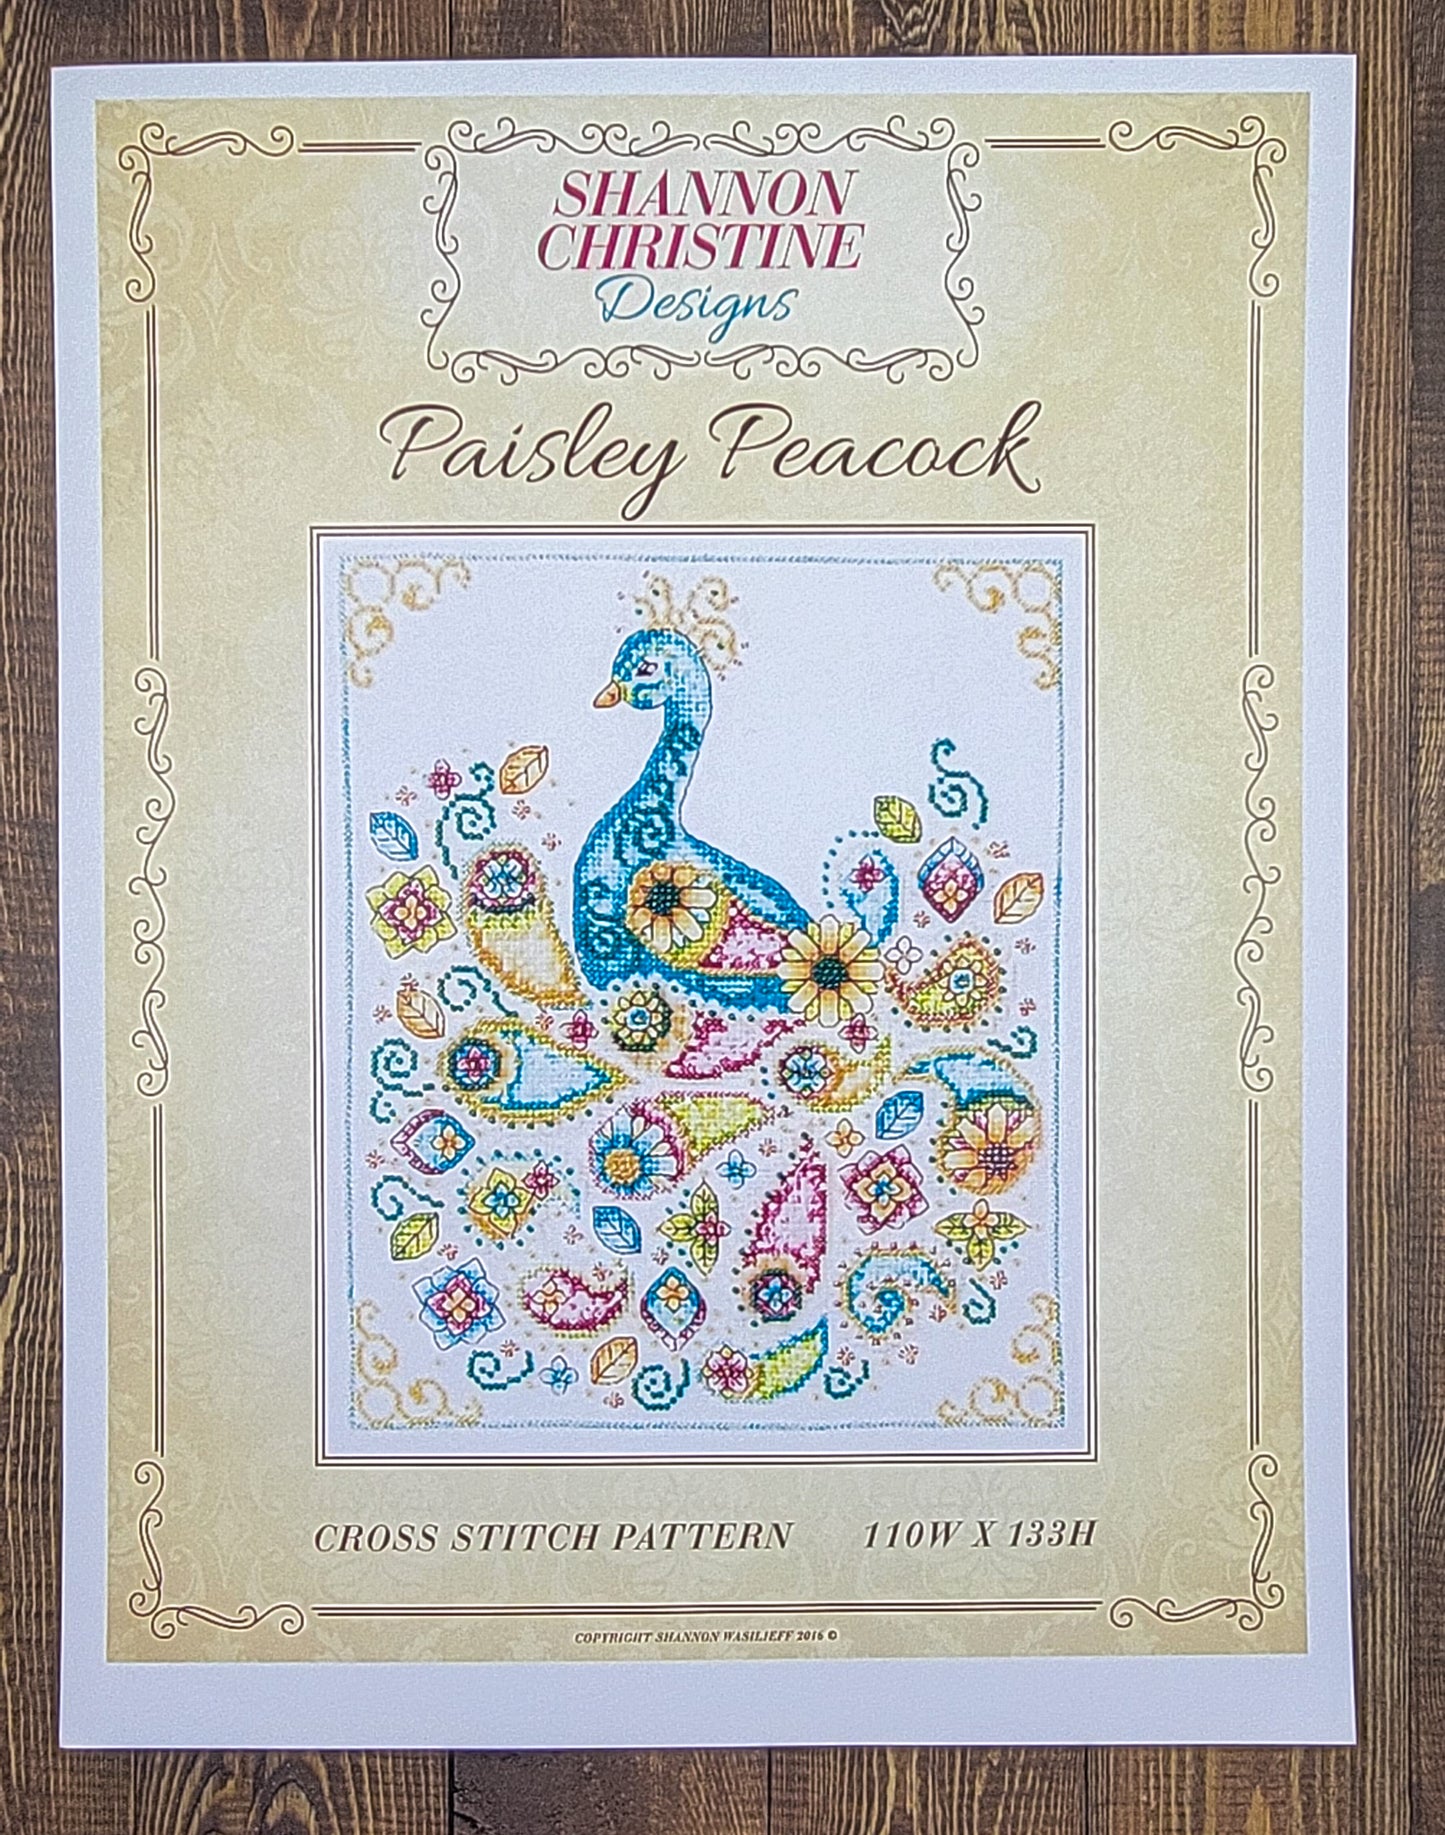 Paisley Peacock